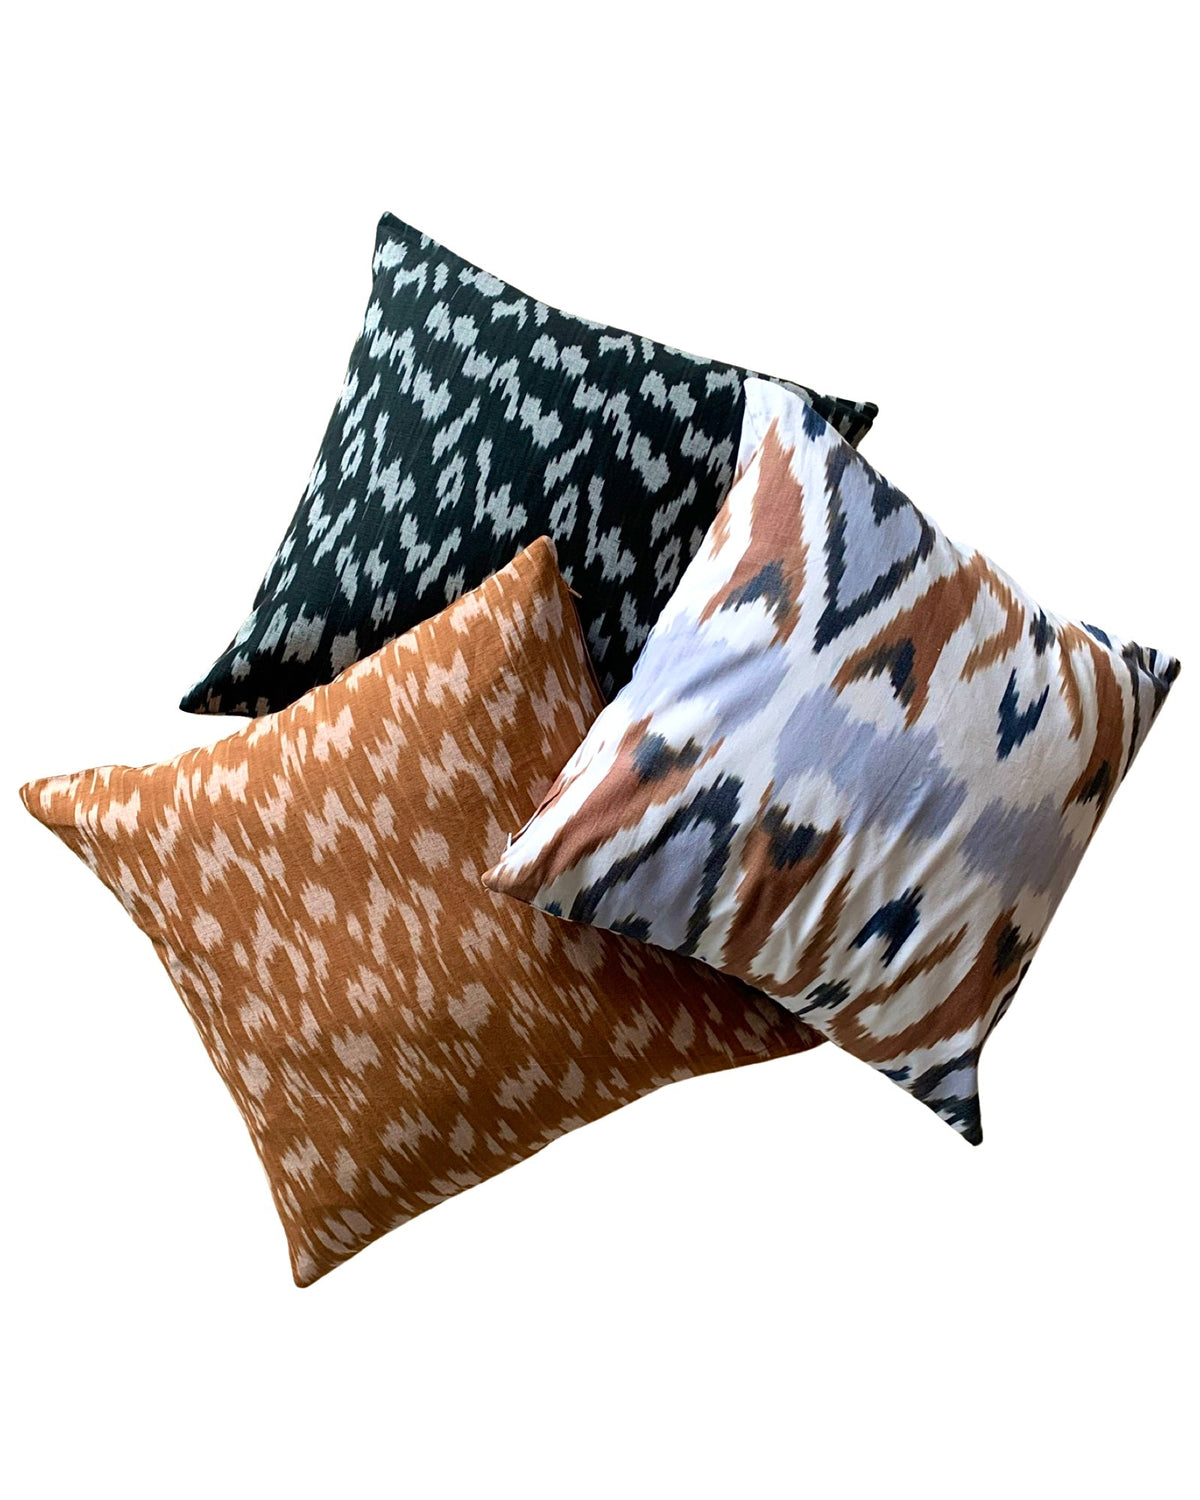 Artisanal Ikat Cushion Covers